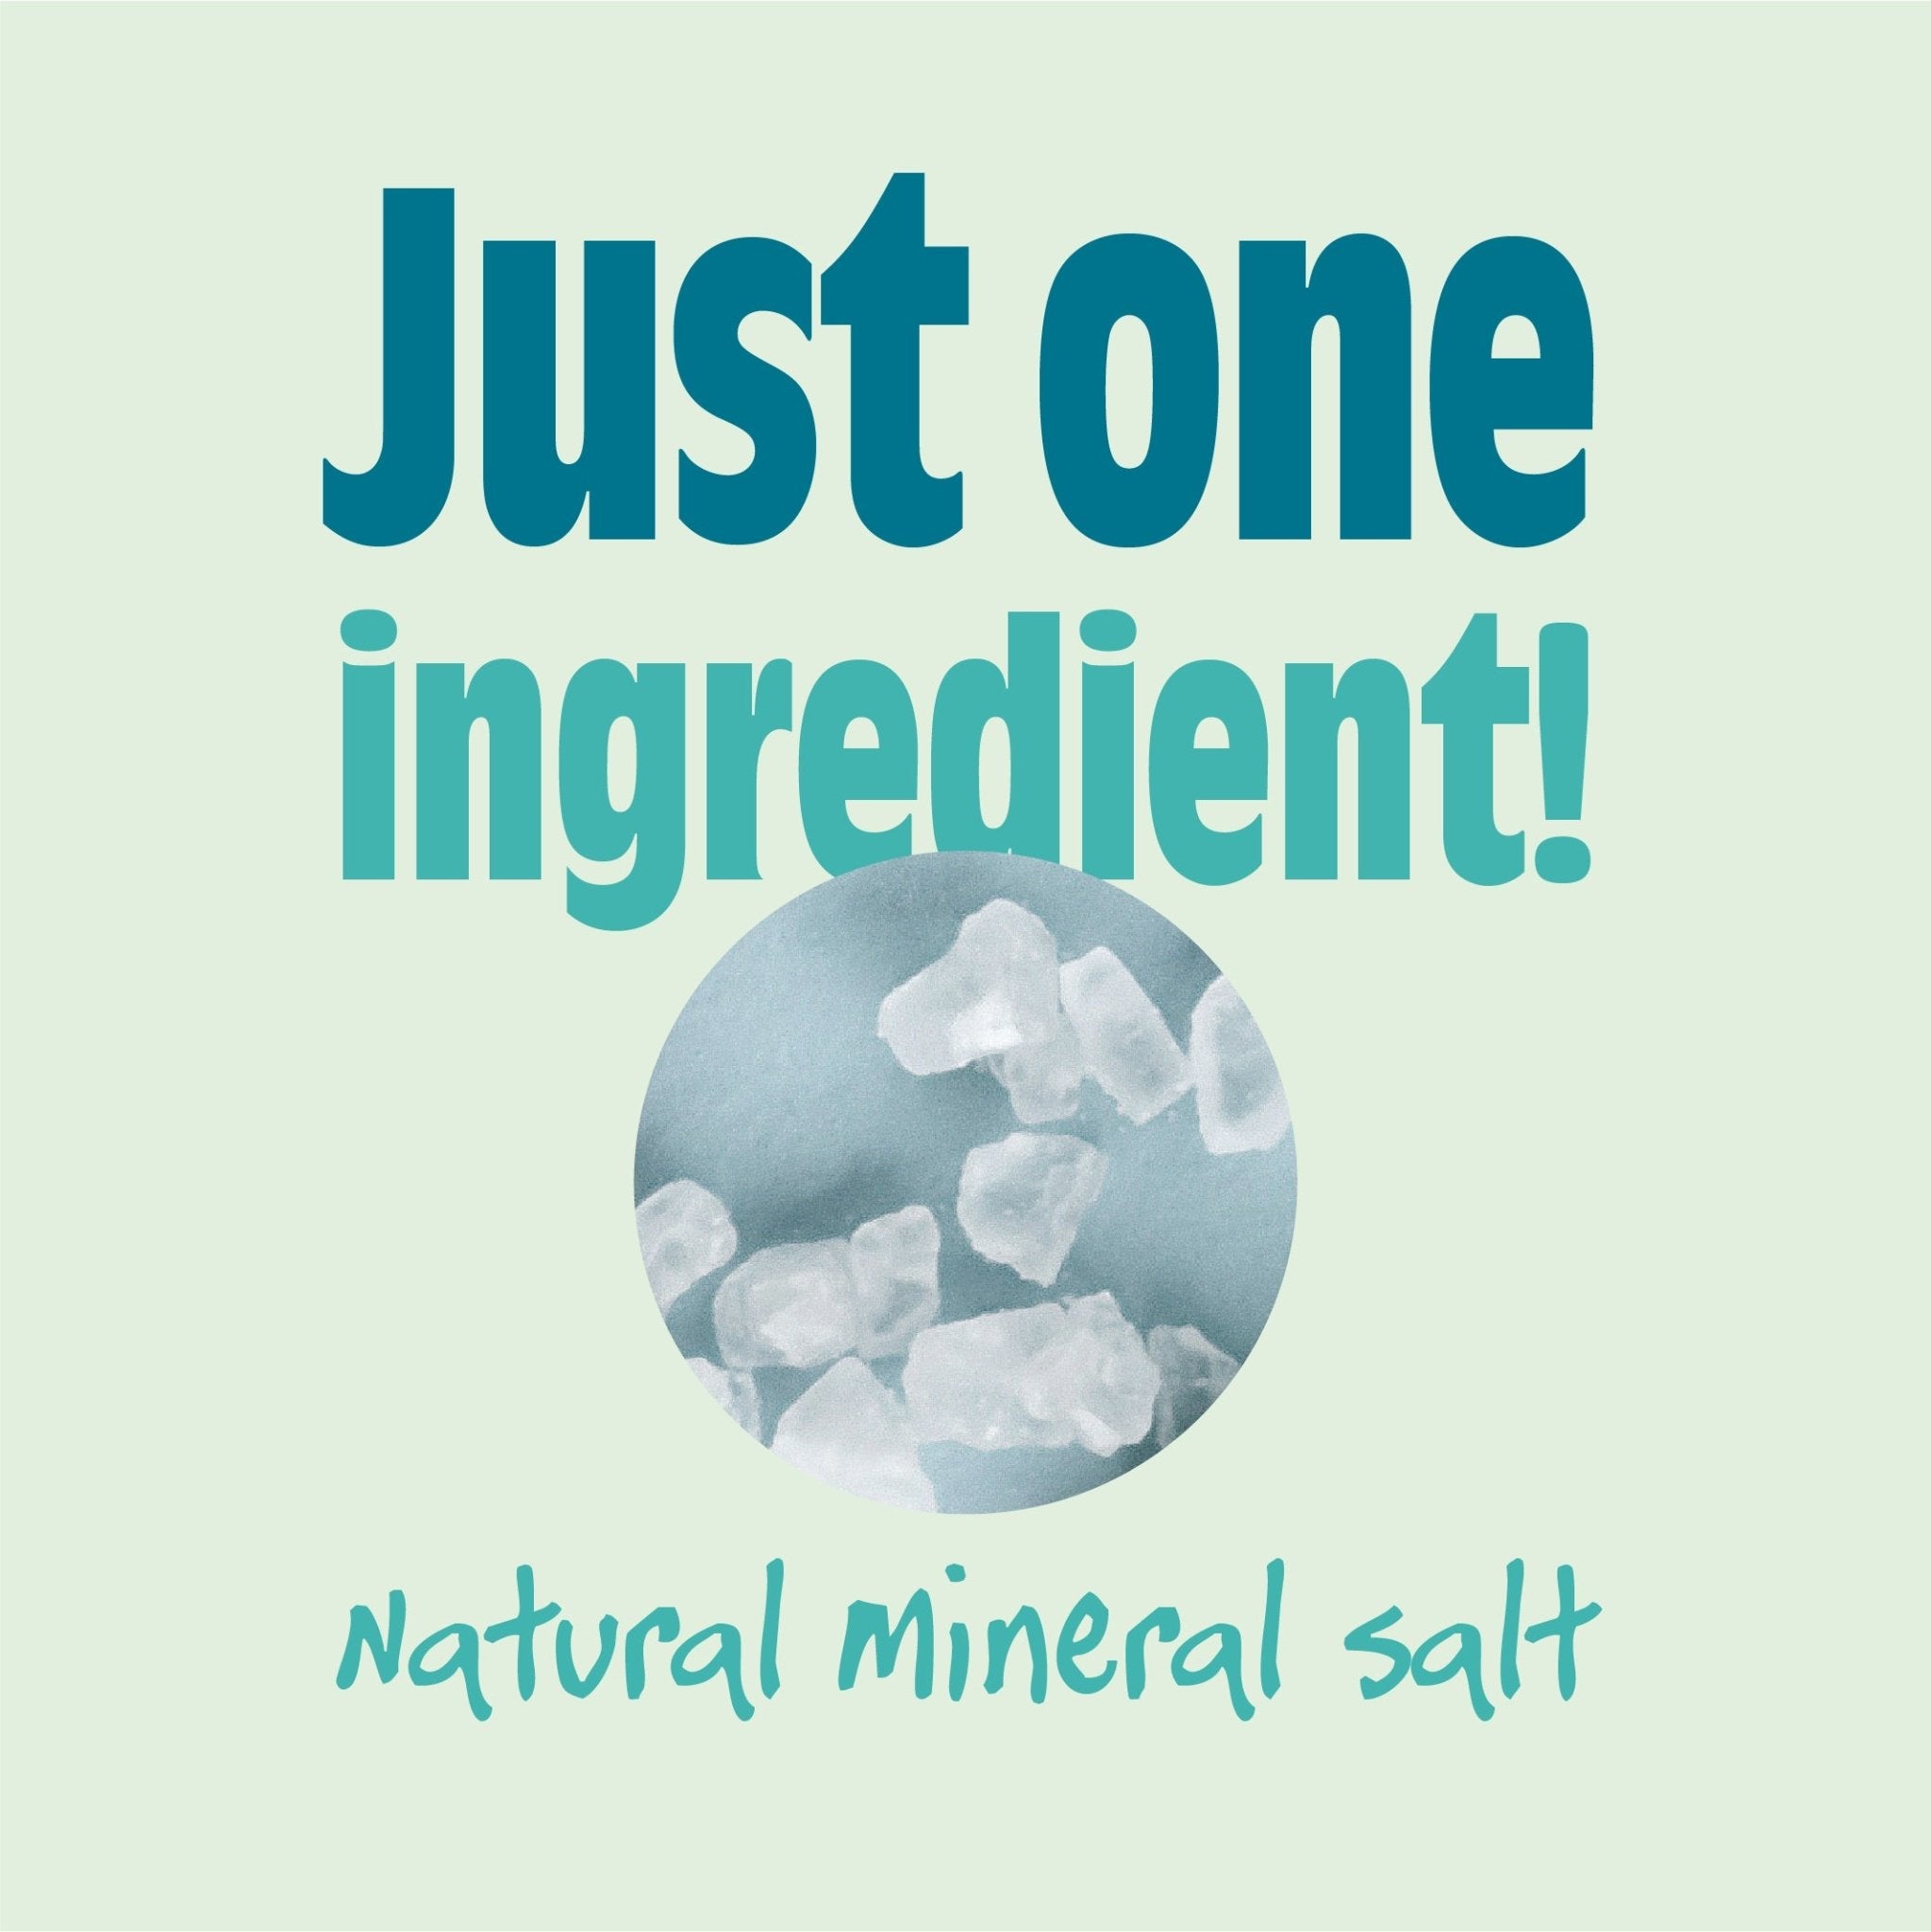 Plastic Free Deodorant Crystal 75g - Salt of the Earth Natural Deodorants